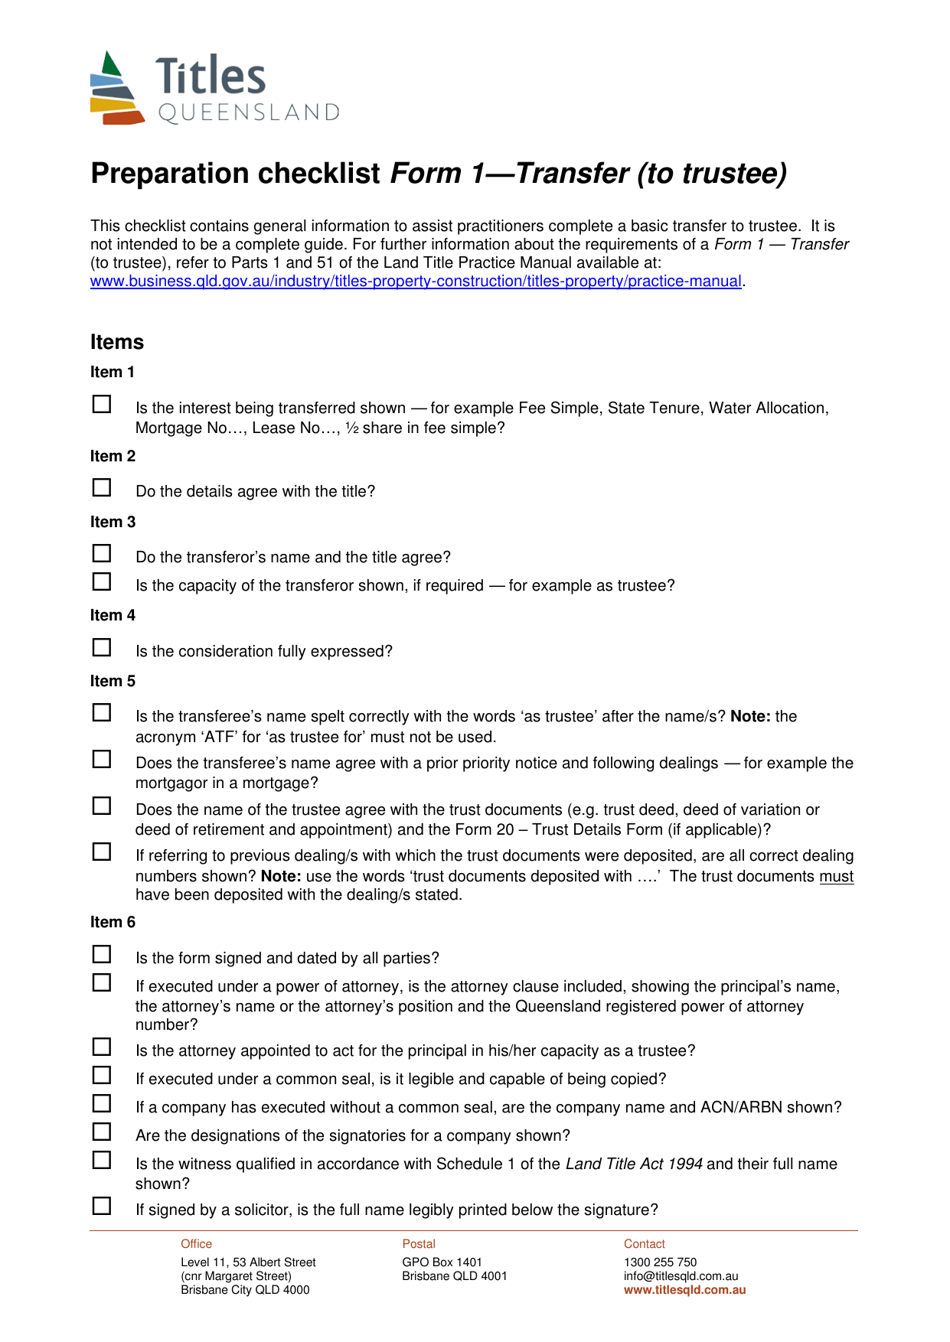 Form 1 Preparation Checklist - Transfer (To Trustee) - Queensland, Australia, Page 1